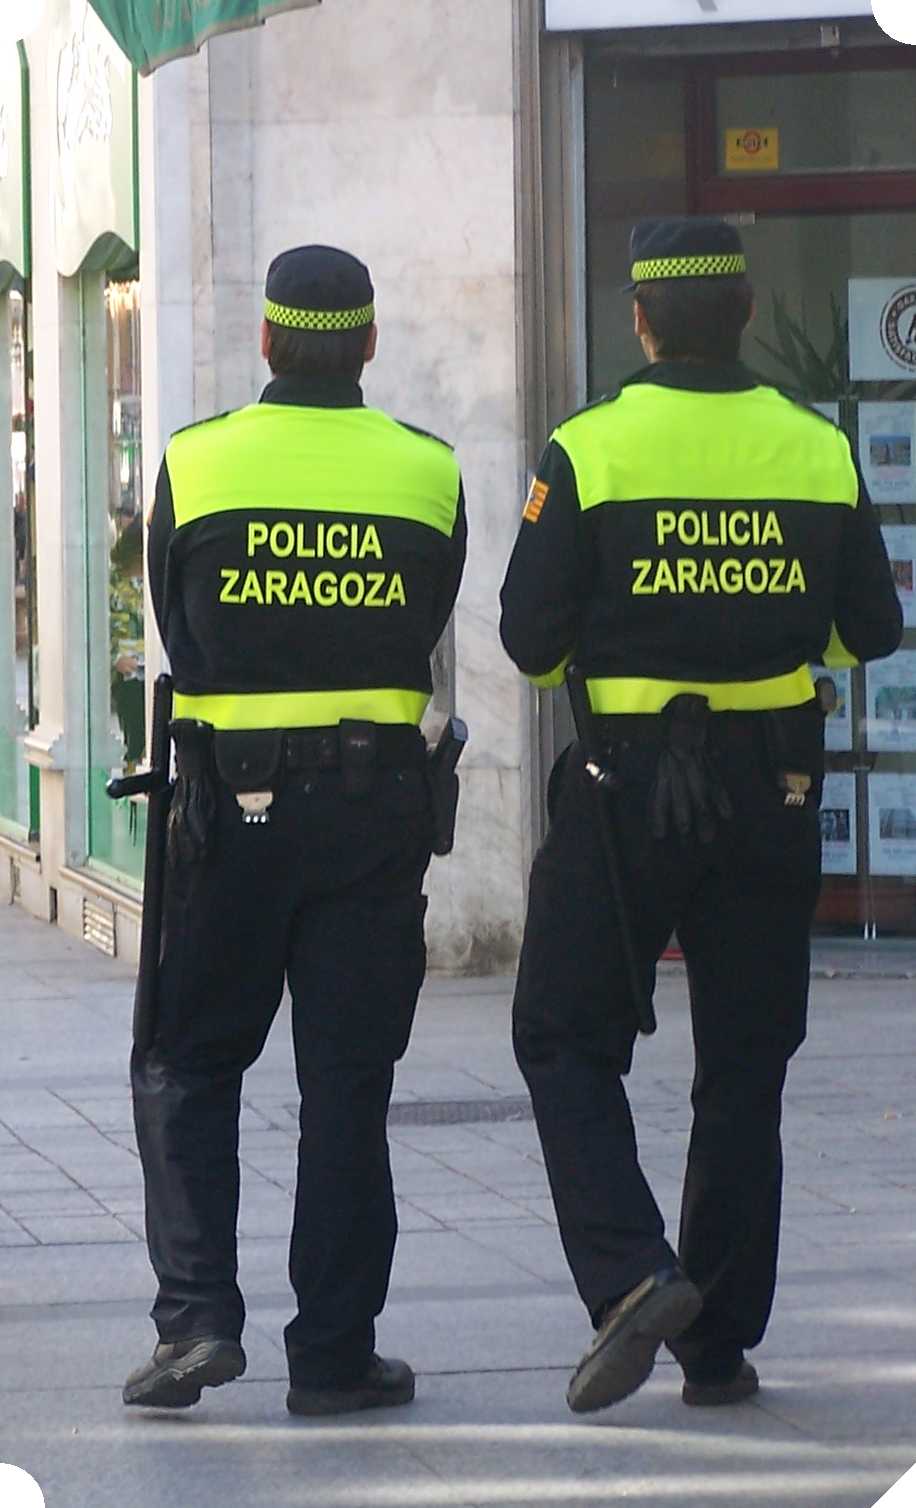 Власти Испании конфисковали 4,1 т кокаина